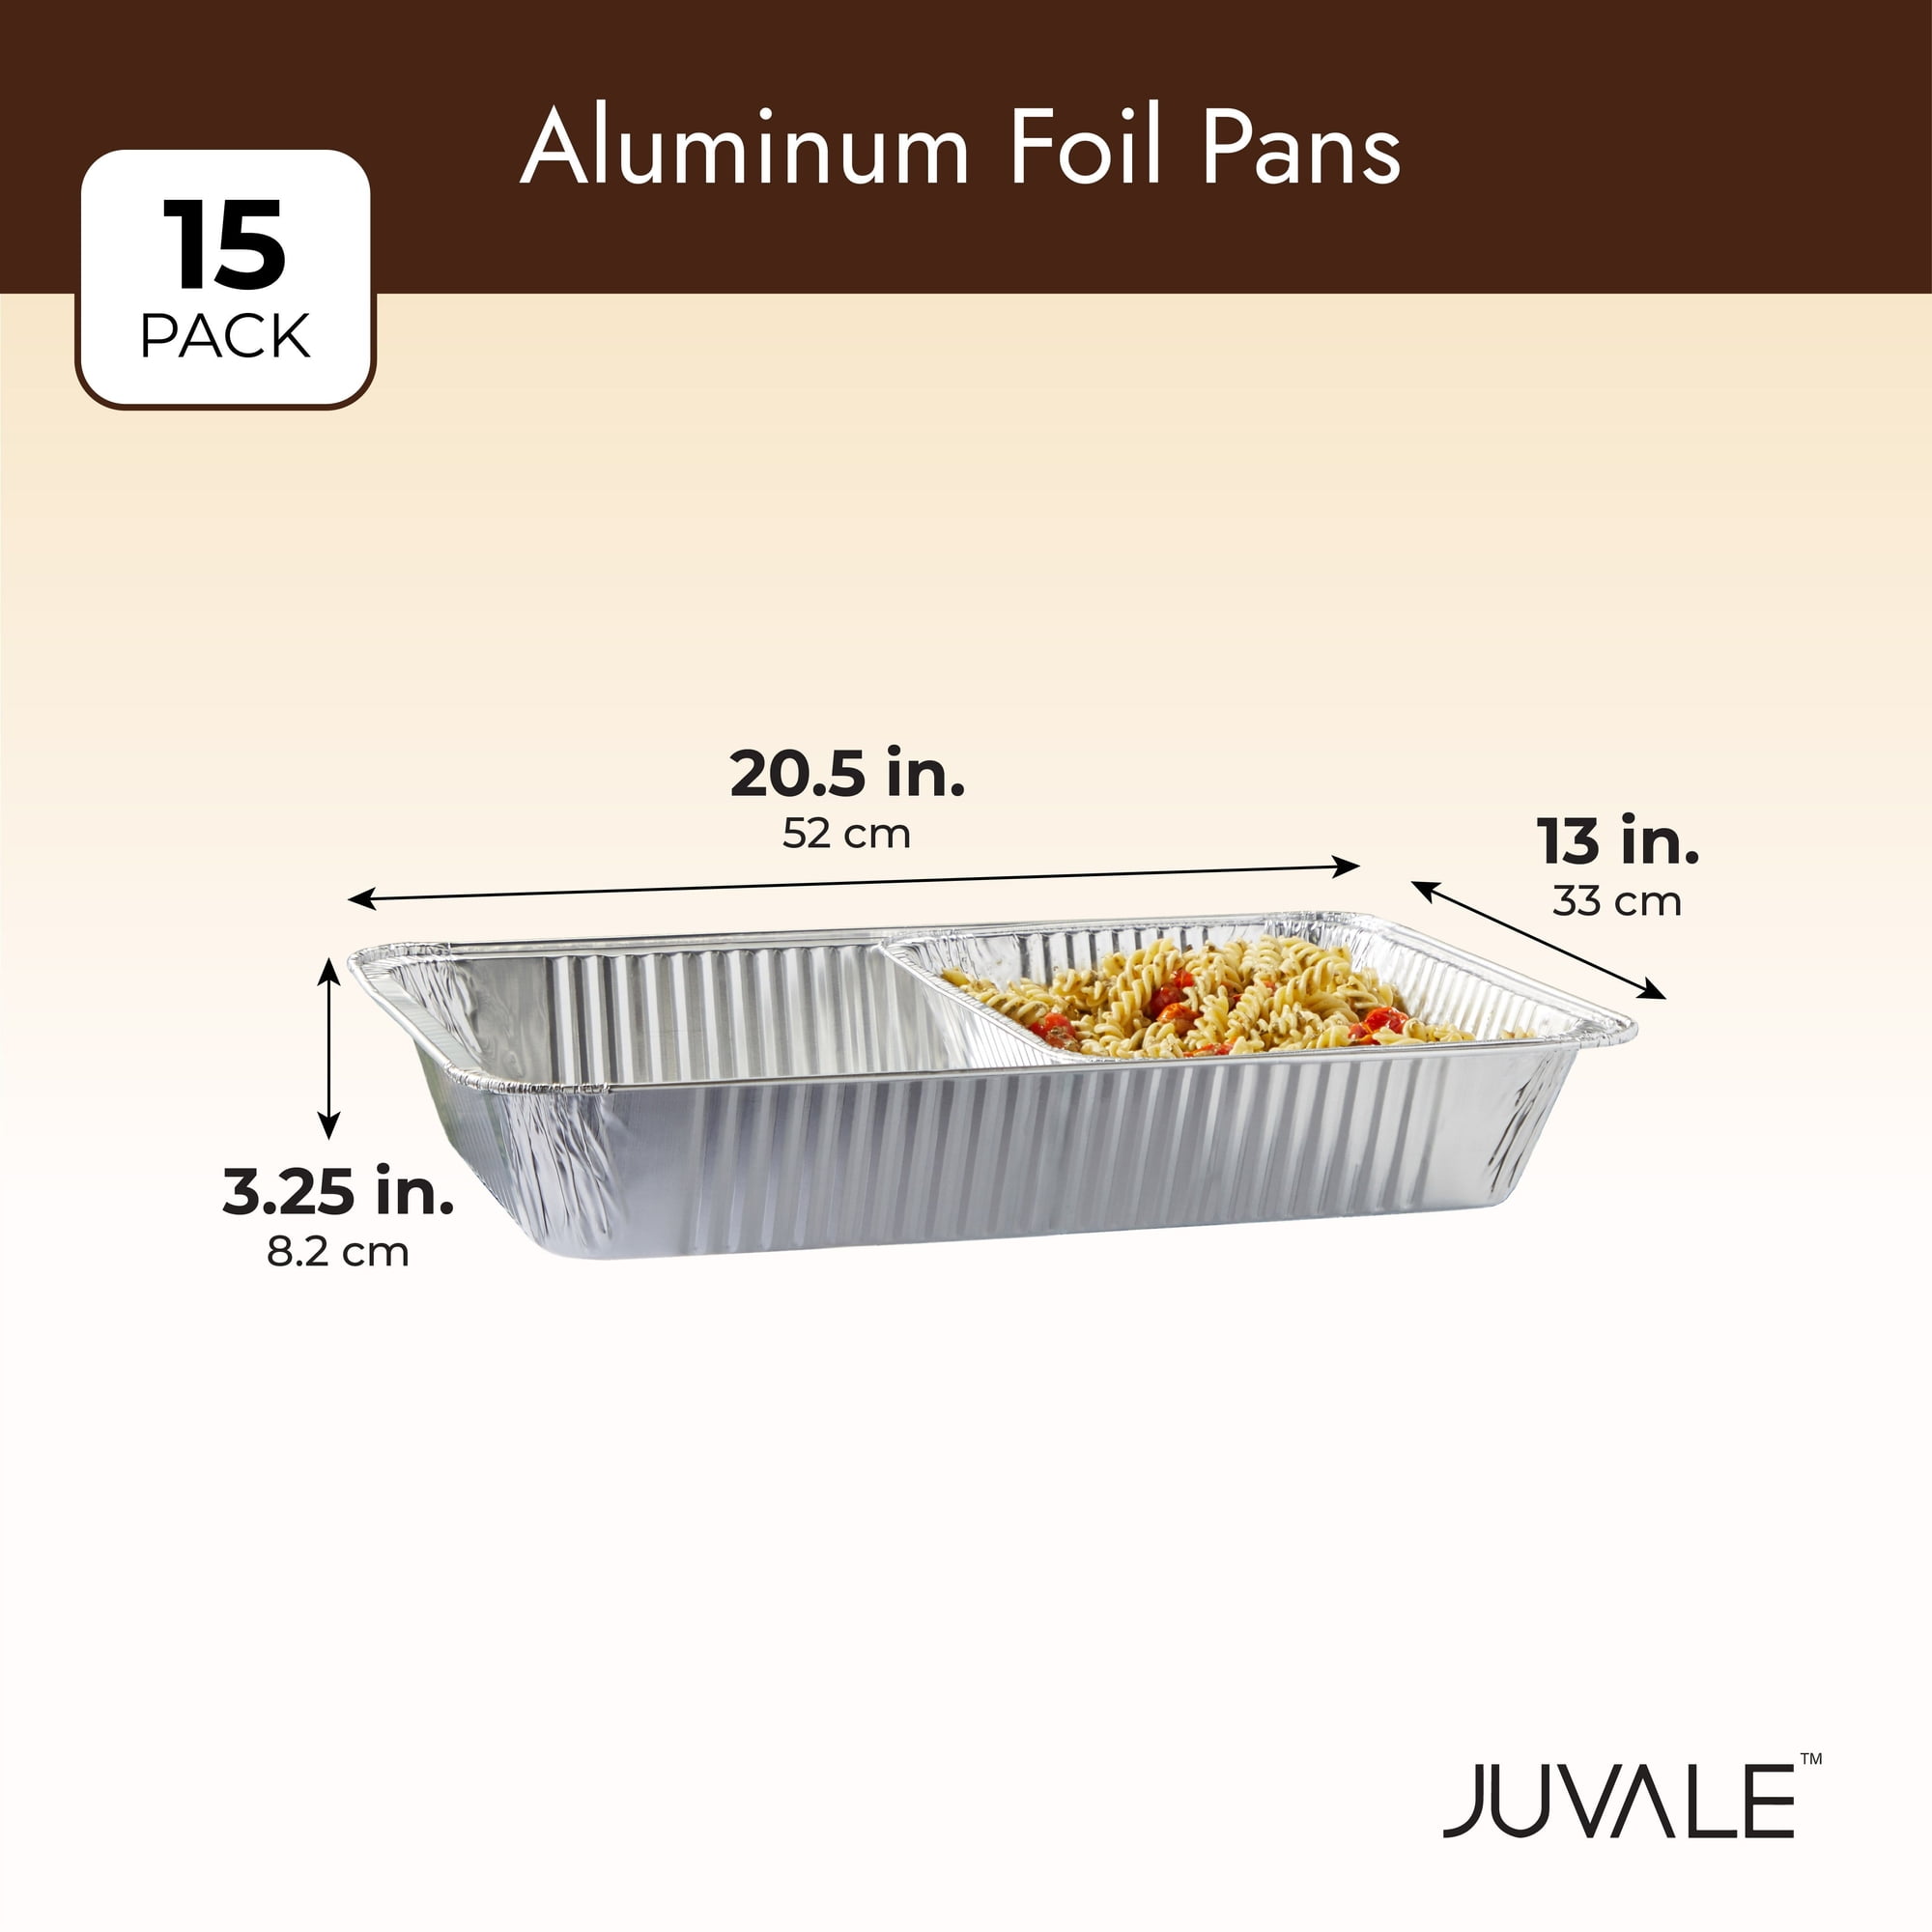  Juvale 15 Pack Aluminum Foil Pans 21 x 13, Full Size